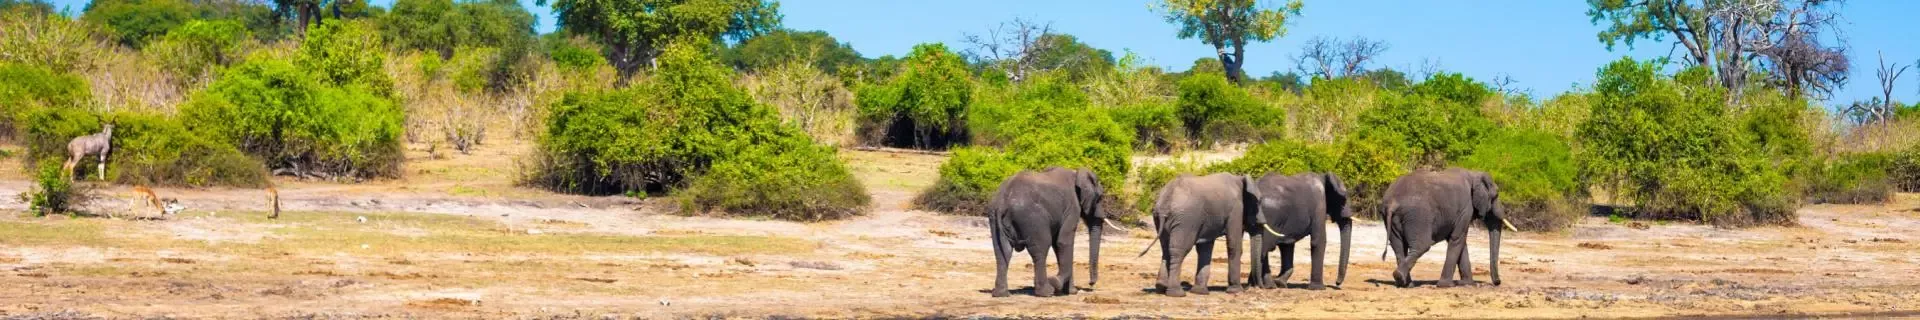 Olifanten in Zuid-Afrika